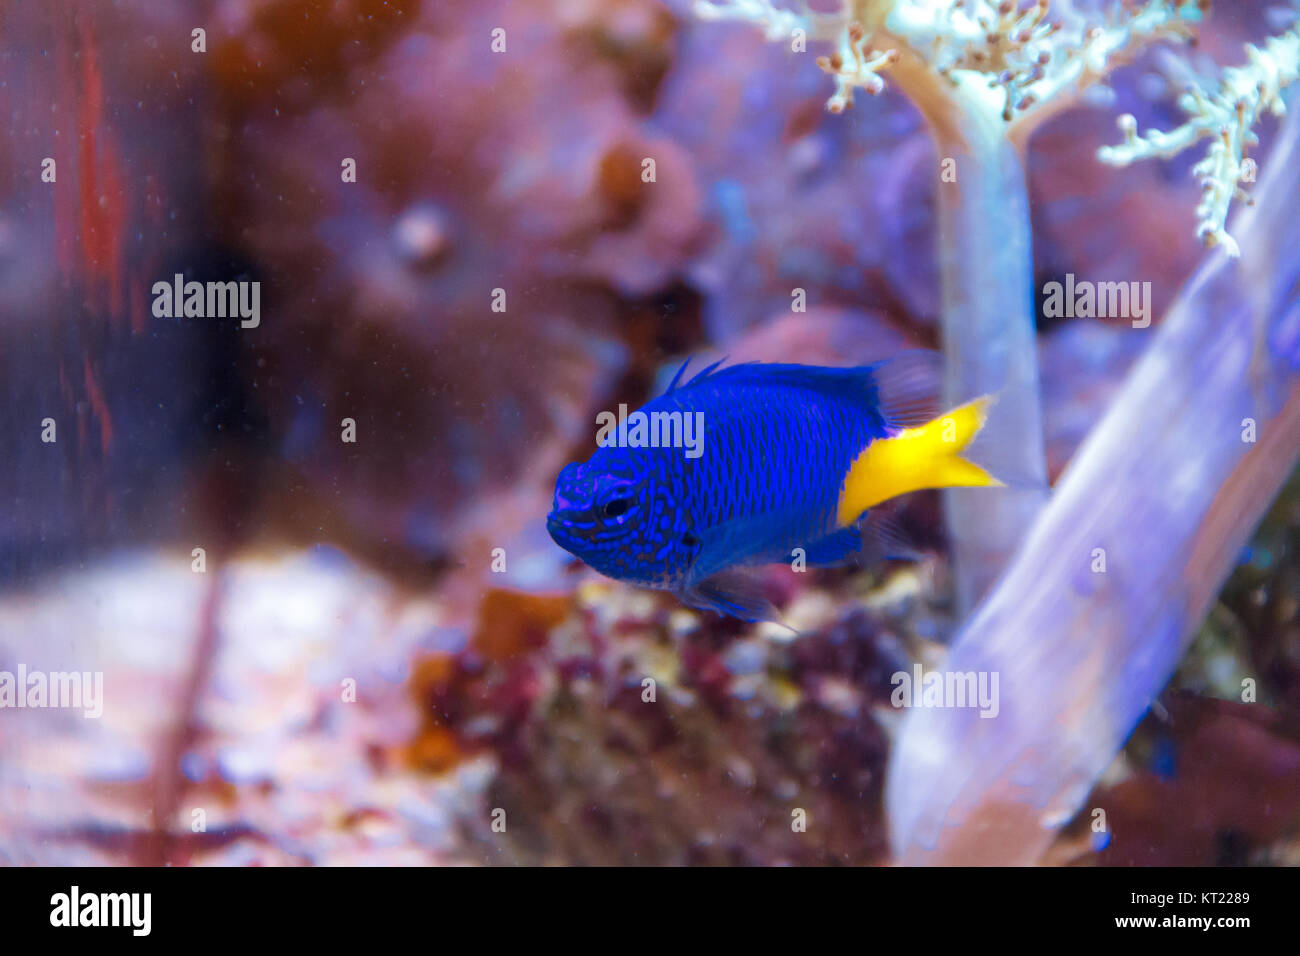 One blue fish chrysiptera parasema with yellow tail Stock Photo